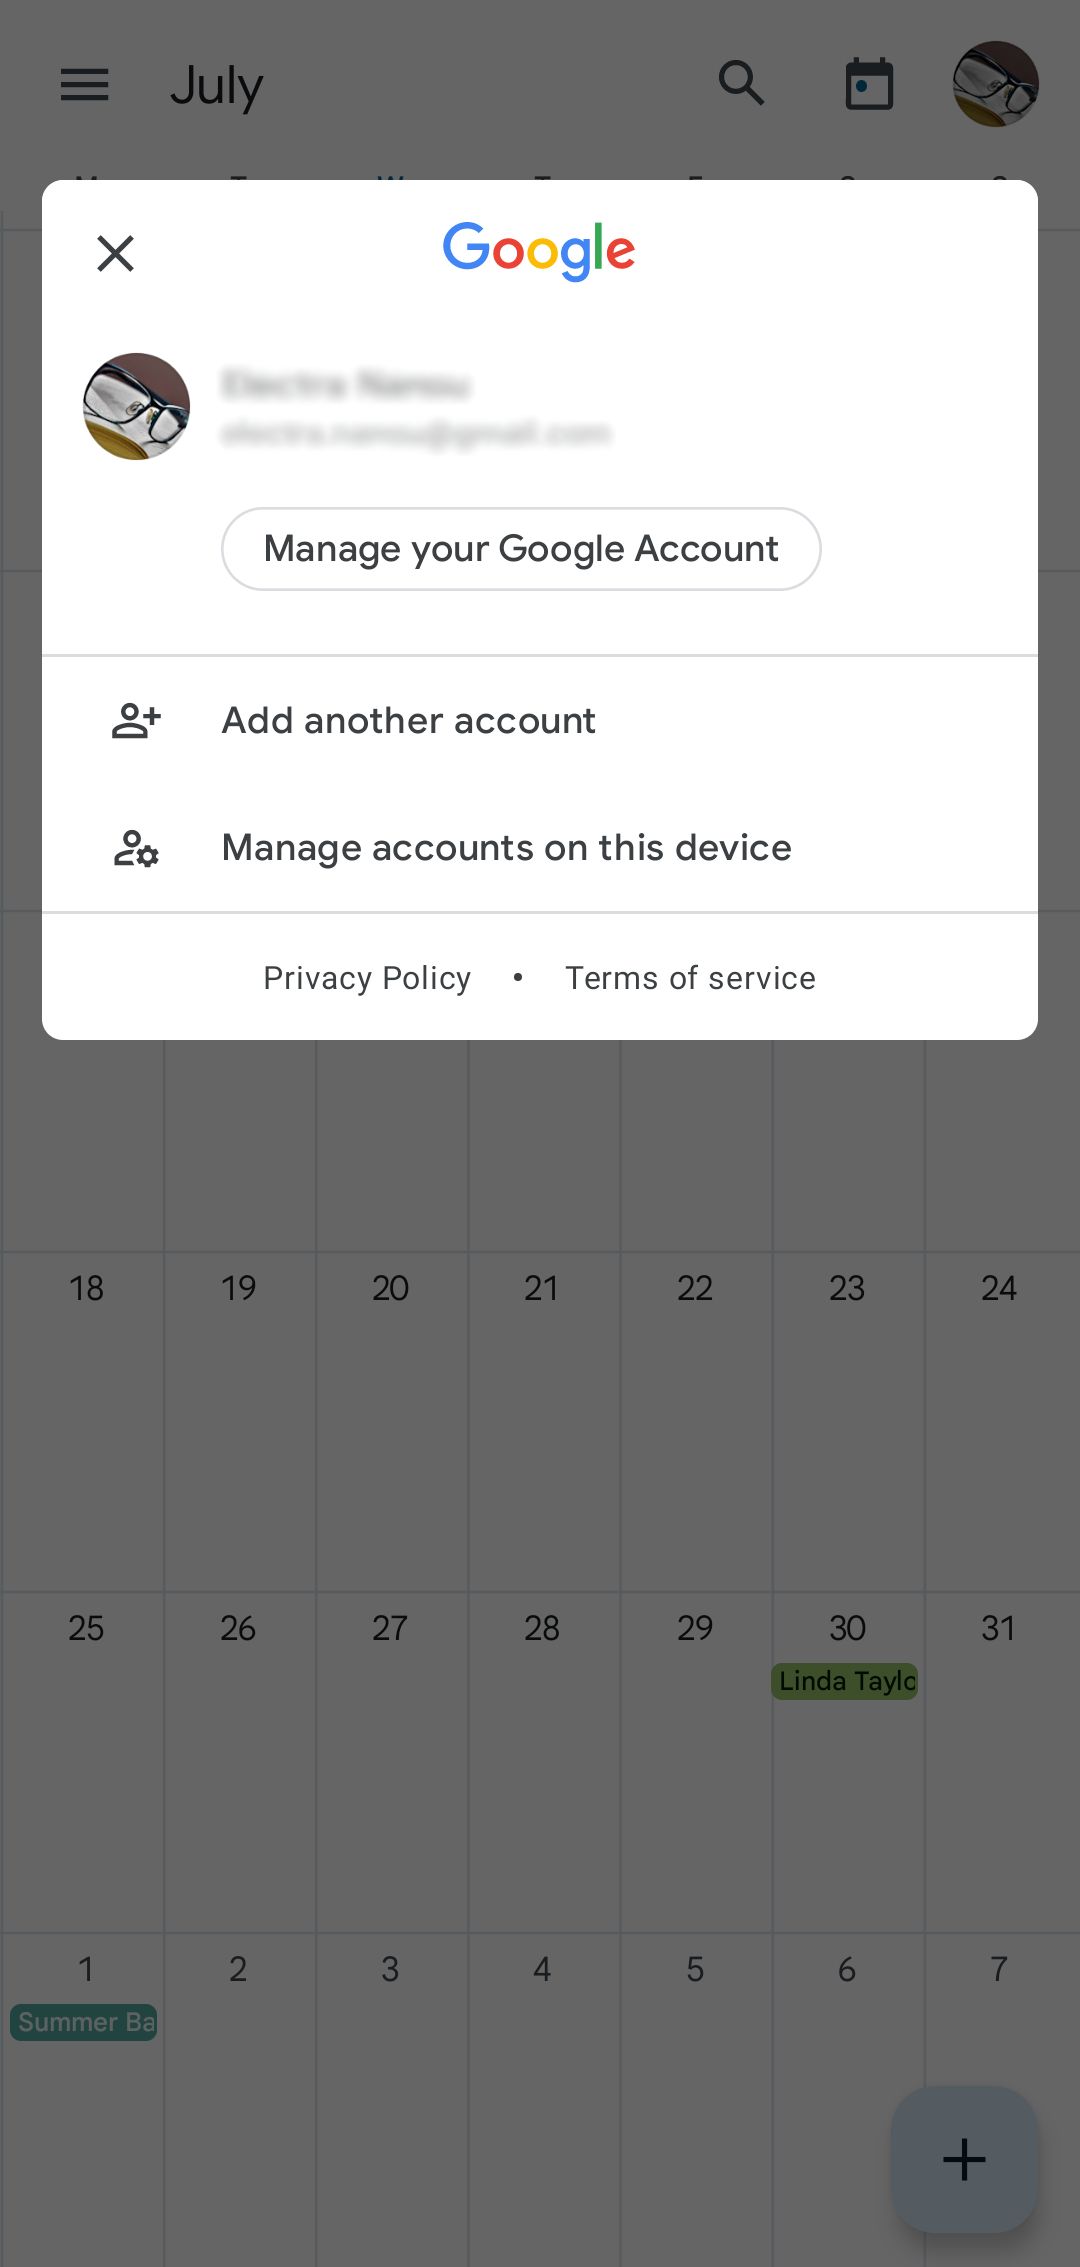 Account Profile on Google Calendar